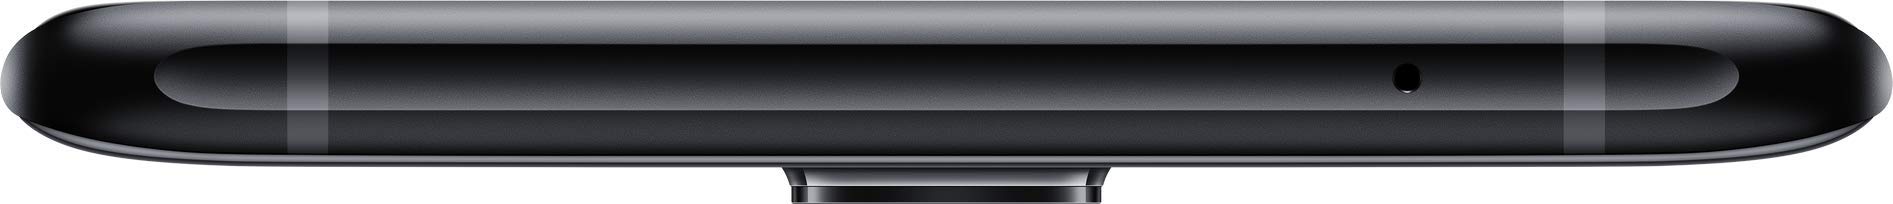 OnePlus 8 Pro Onyx Black,​ 5G Unlocked Android Smartphone U.S Version, 12GB RAM+256GB Storage, 120Hz Fluid Display,Quad Camera, Wireless Charge, with Alexa Built-in